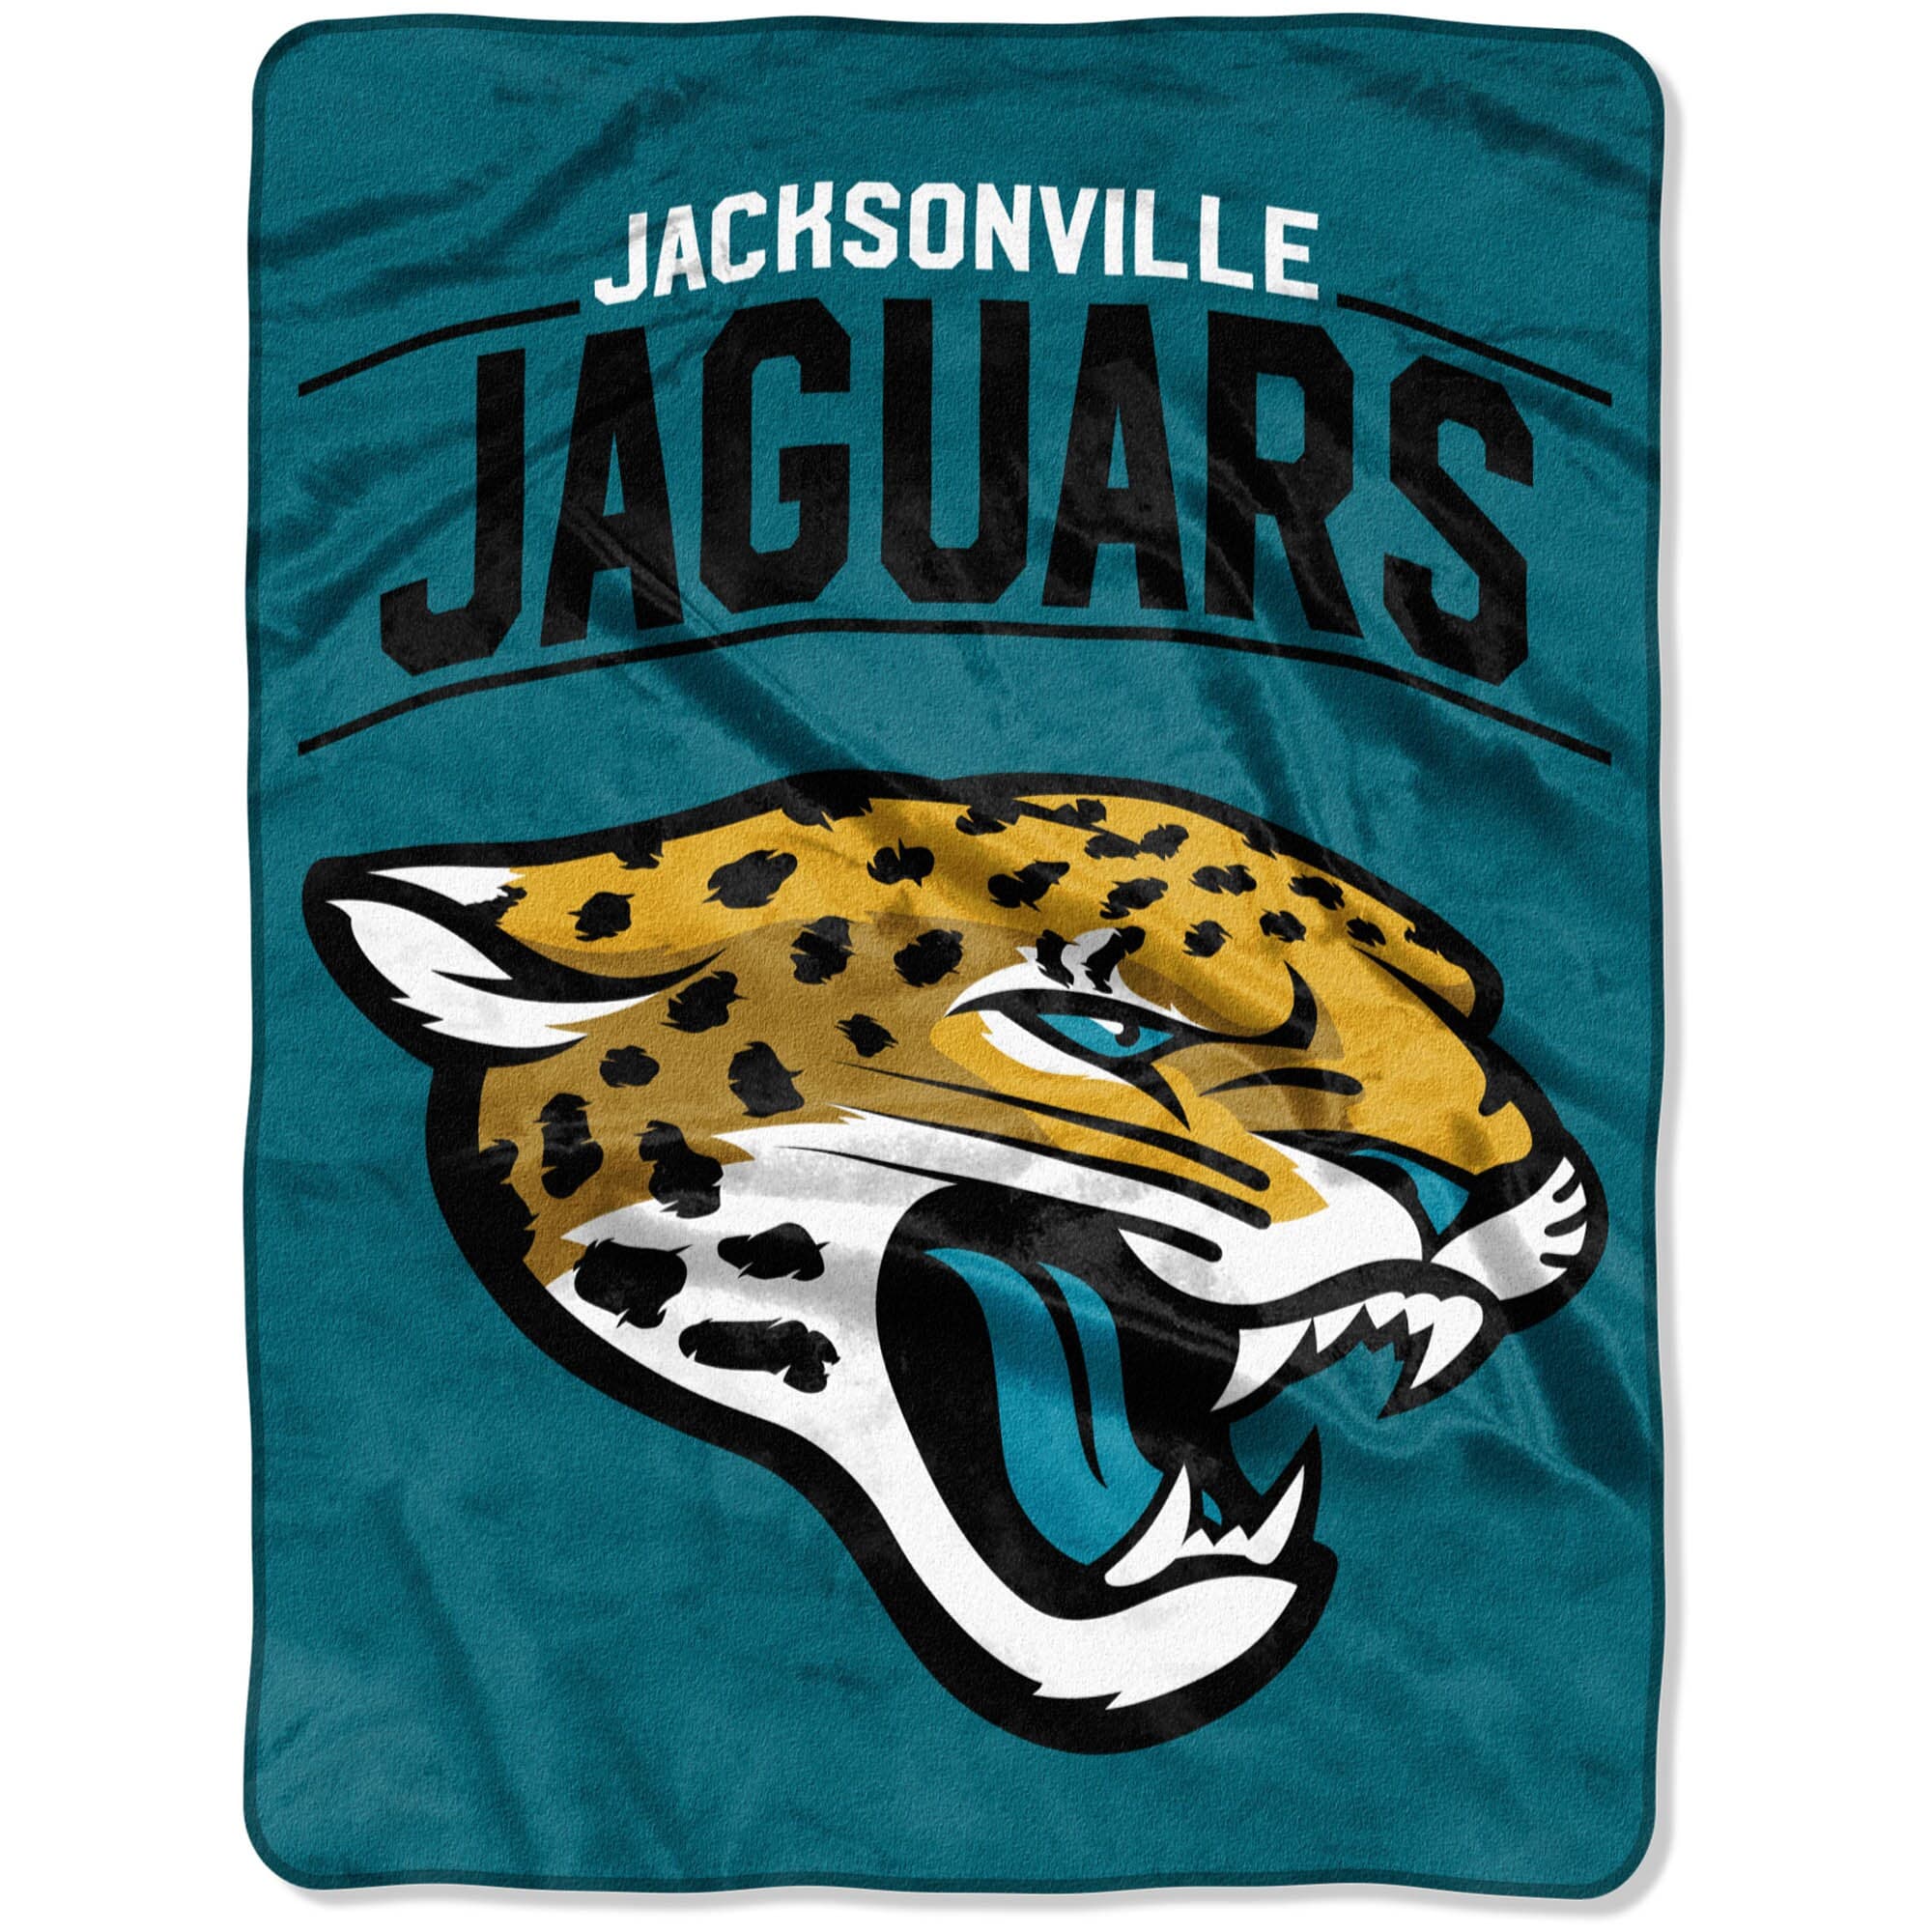 Jacksonville Jaguars Stay-At-Home Survival Kit